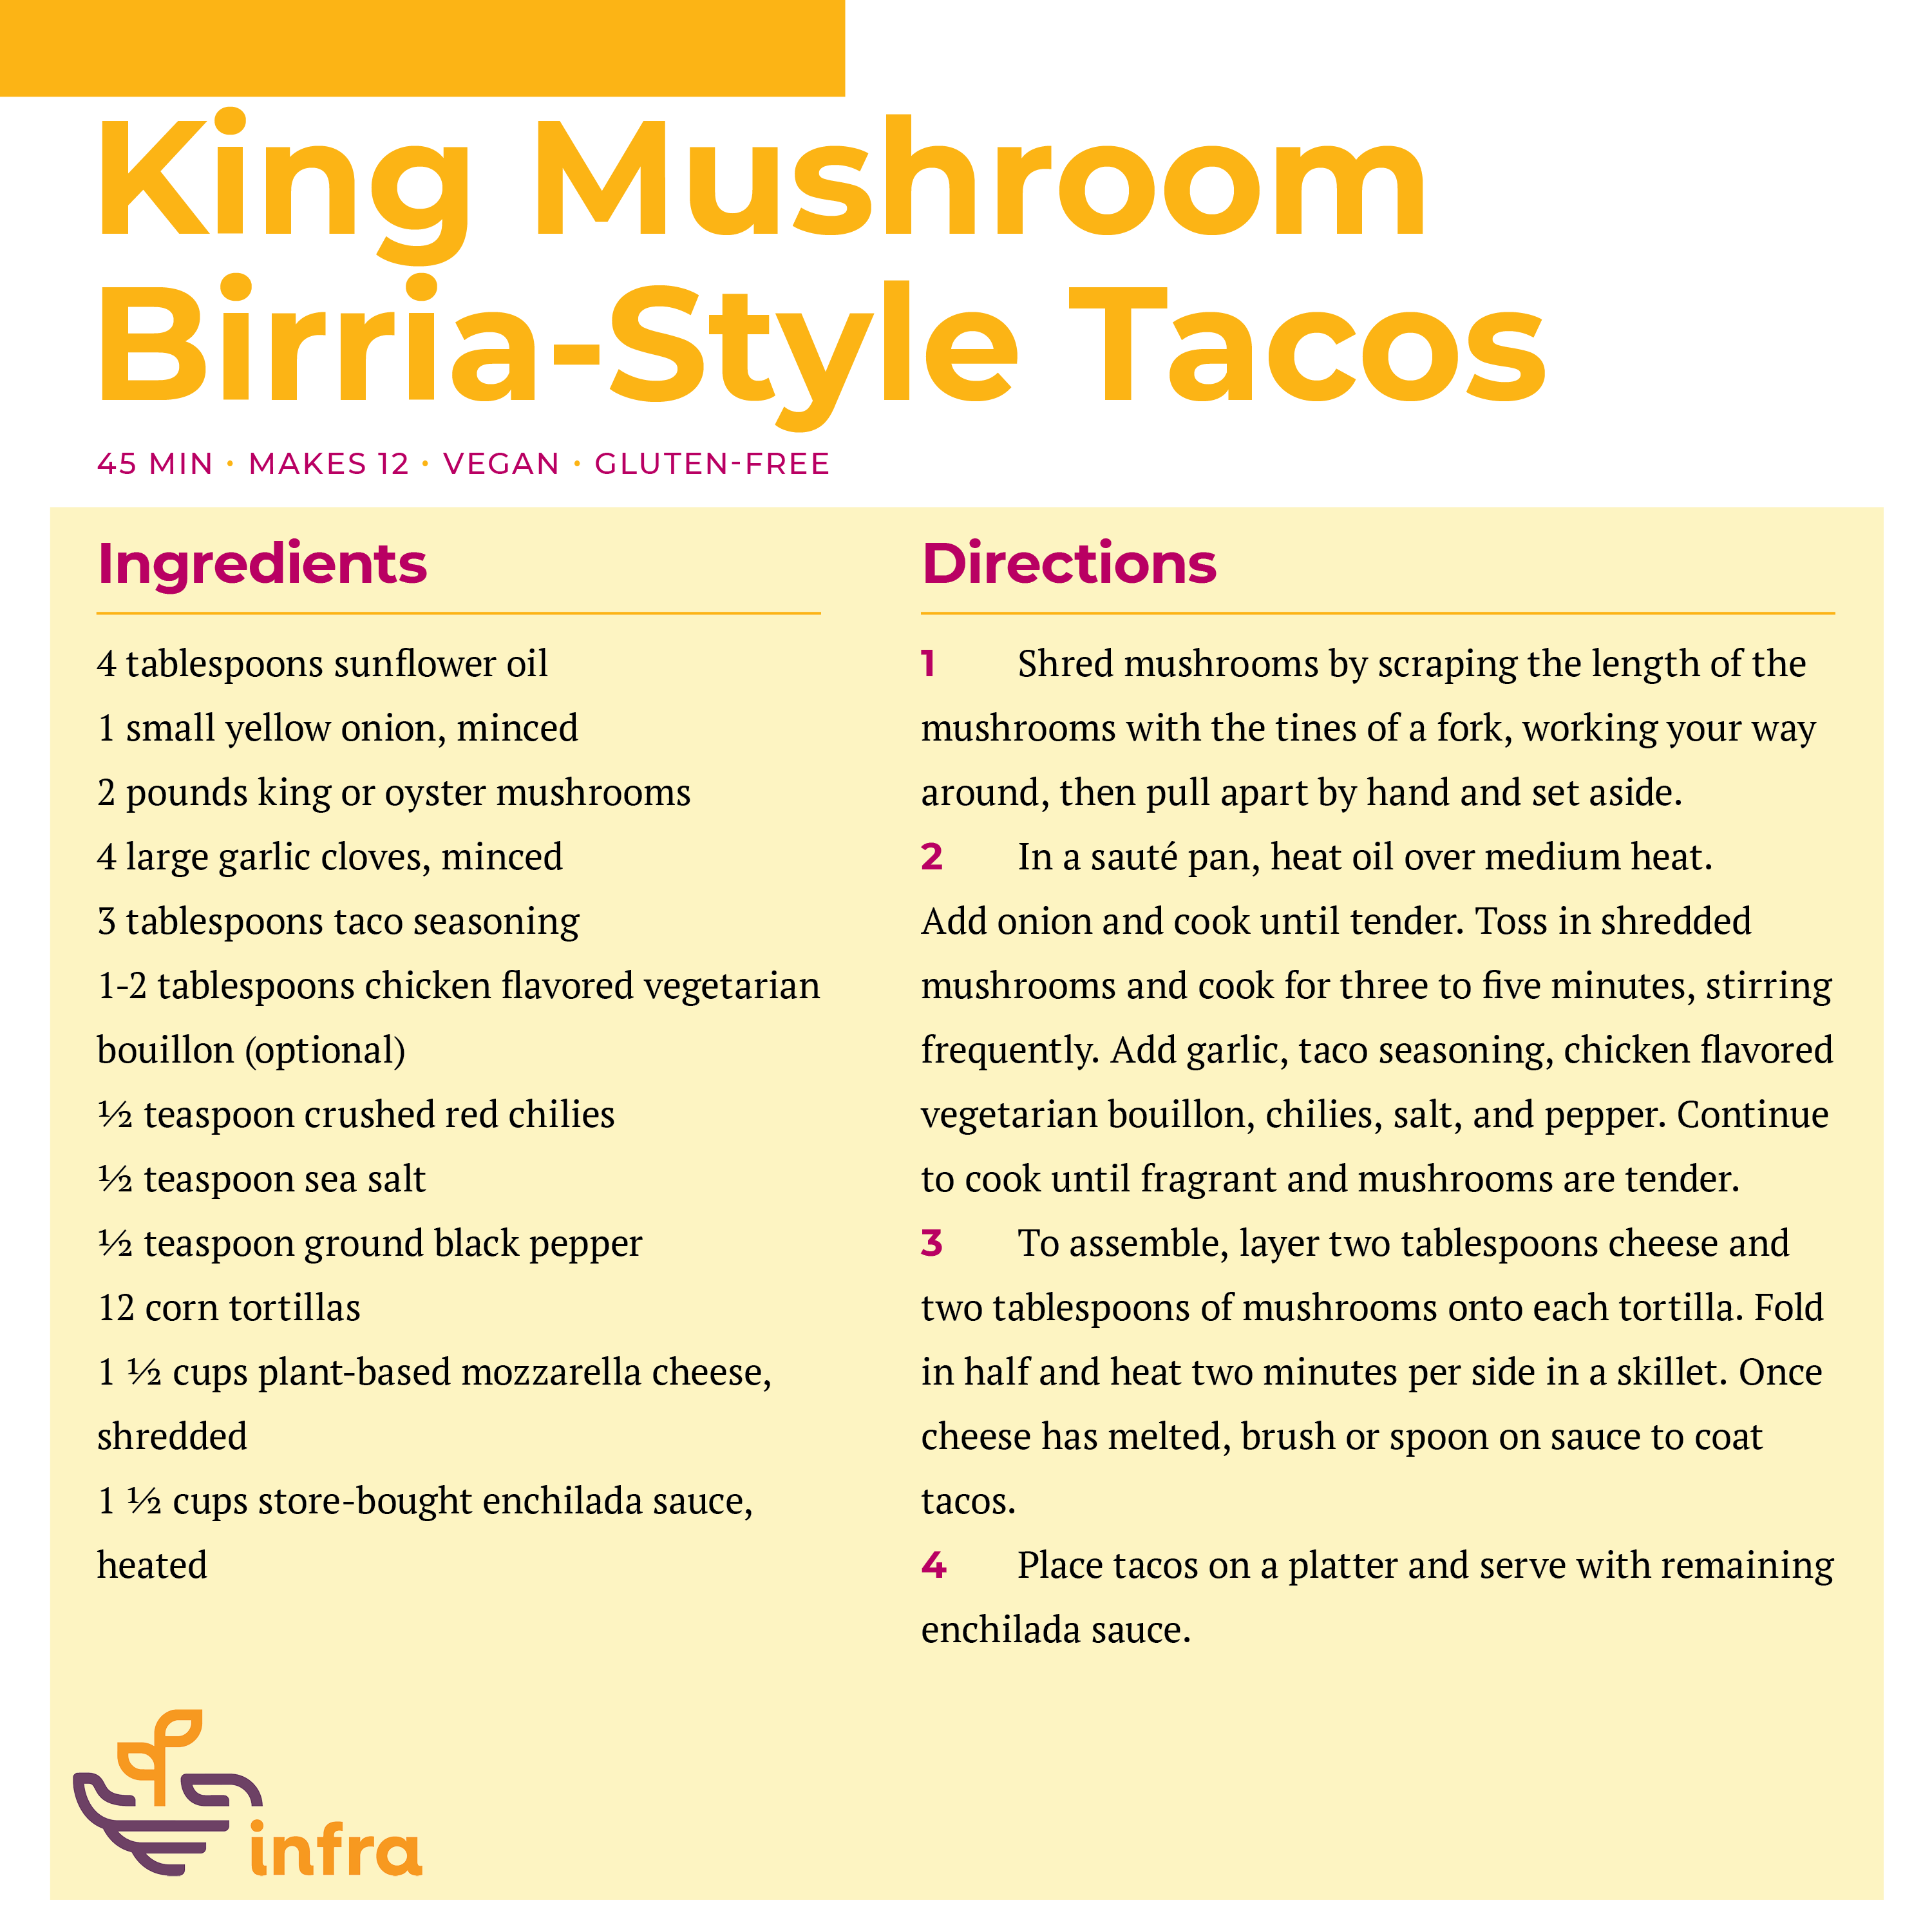 King Mushroom Birria-Style Tacos